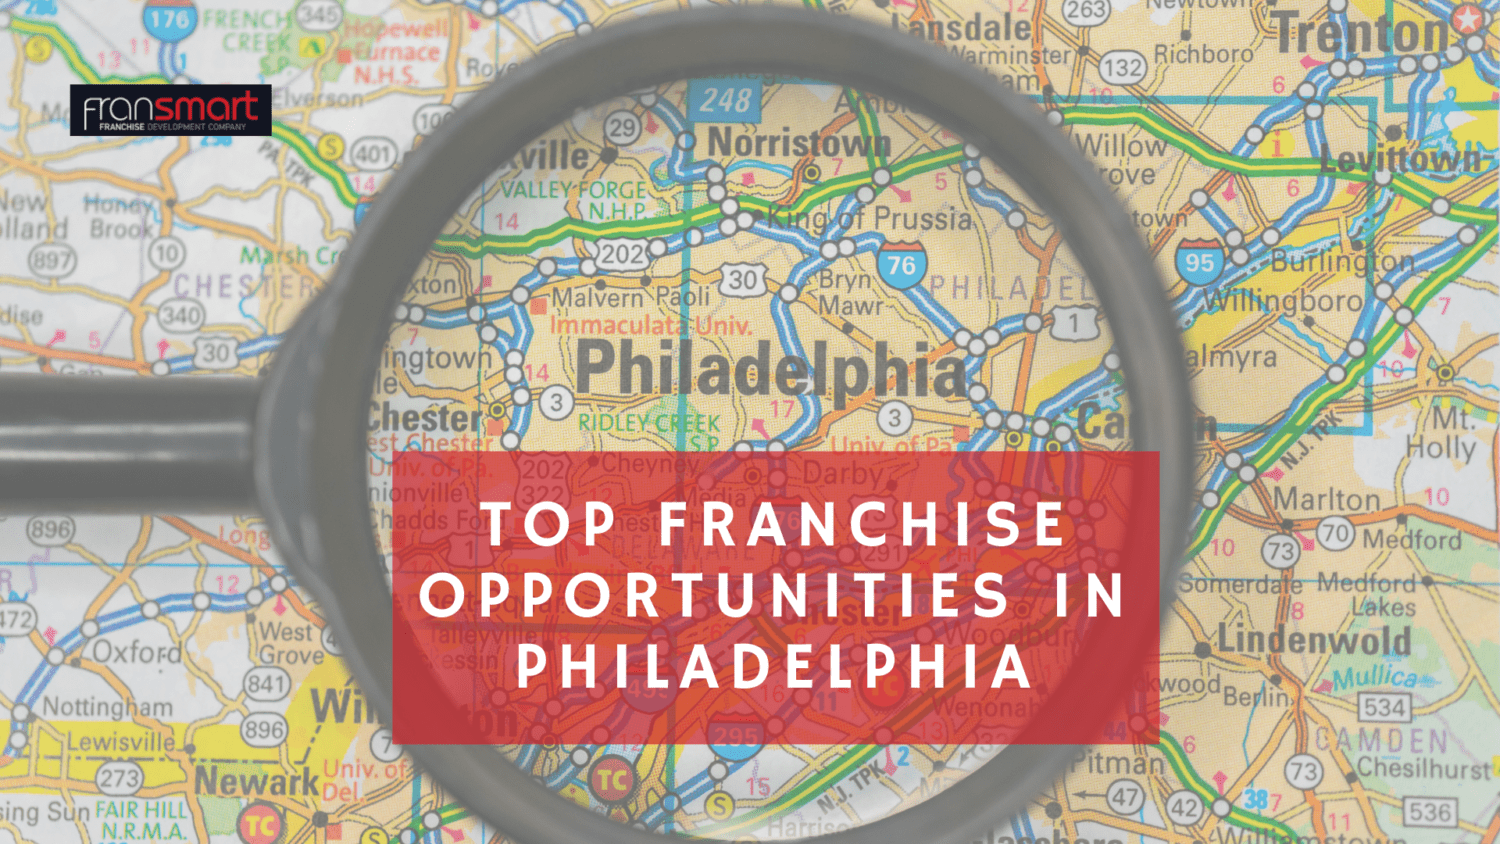 Top Franchise Opportunities in Philadelphia